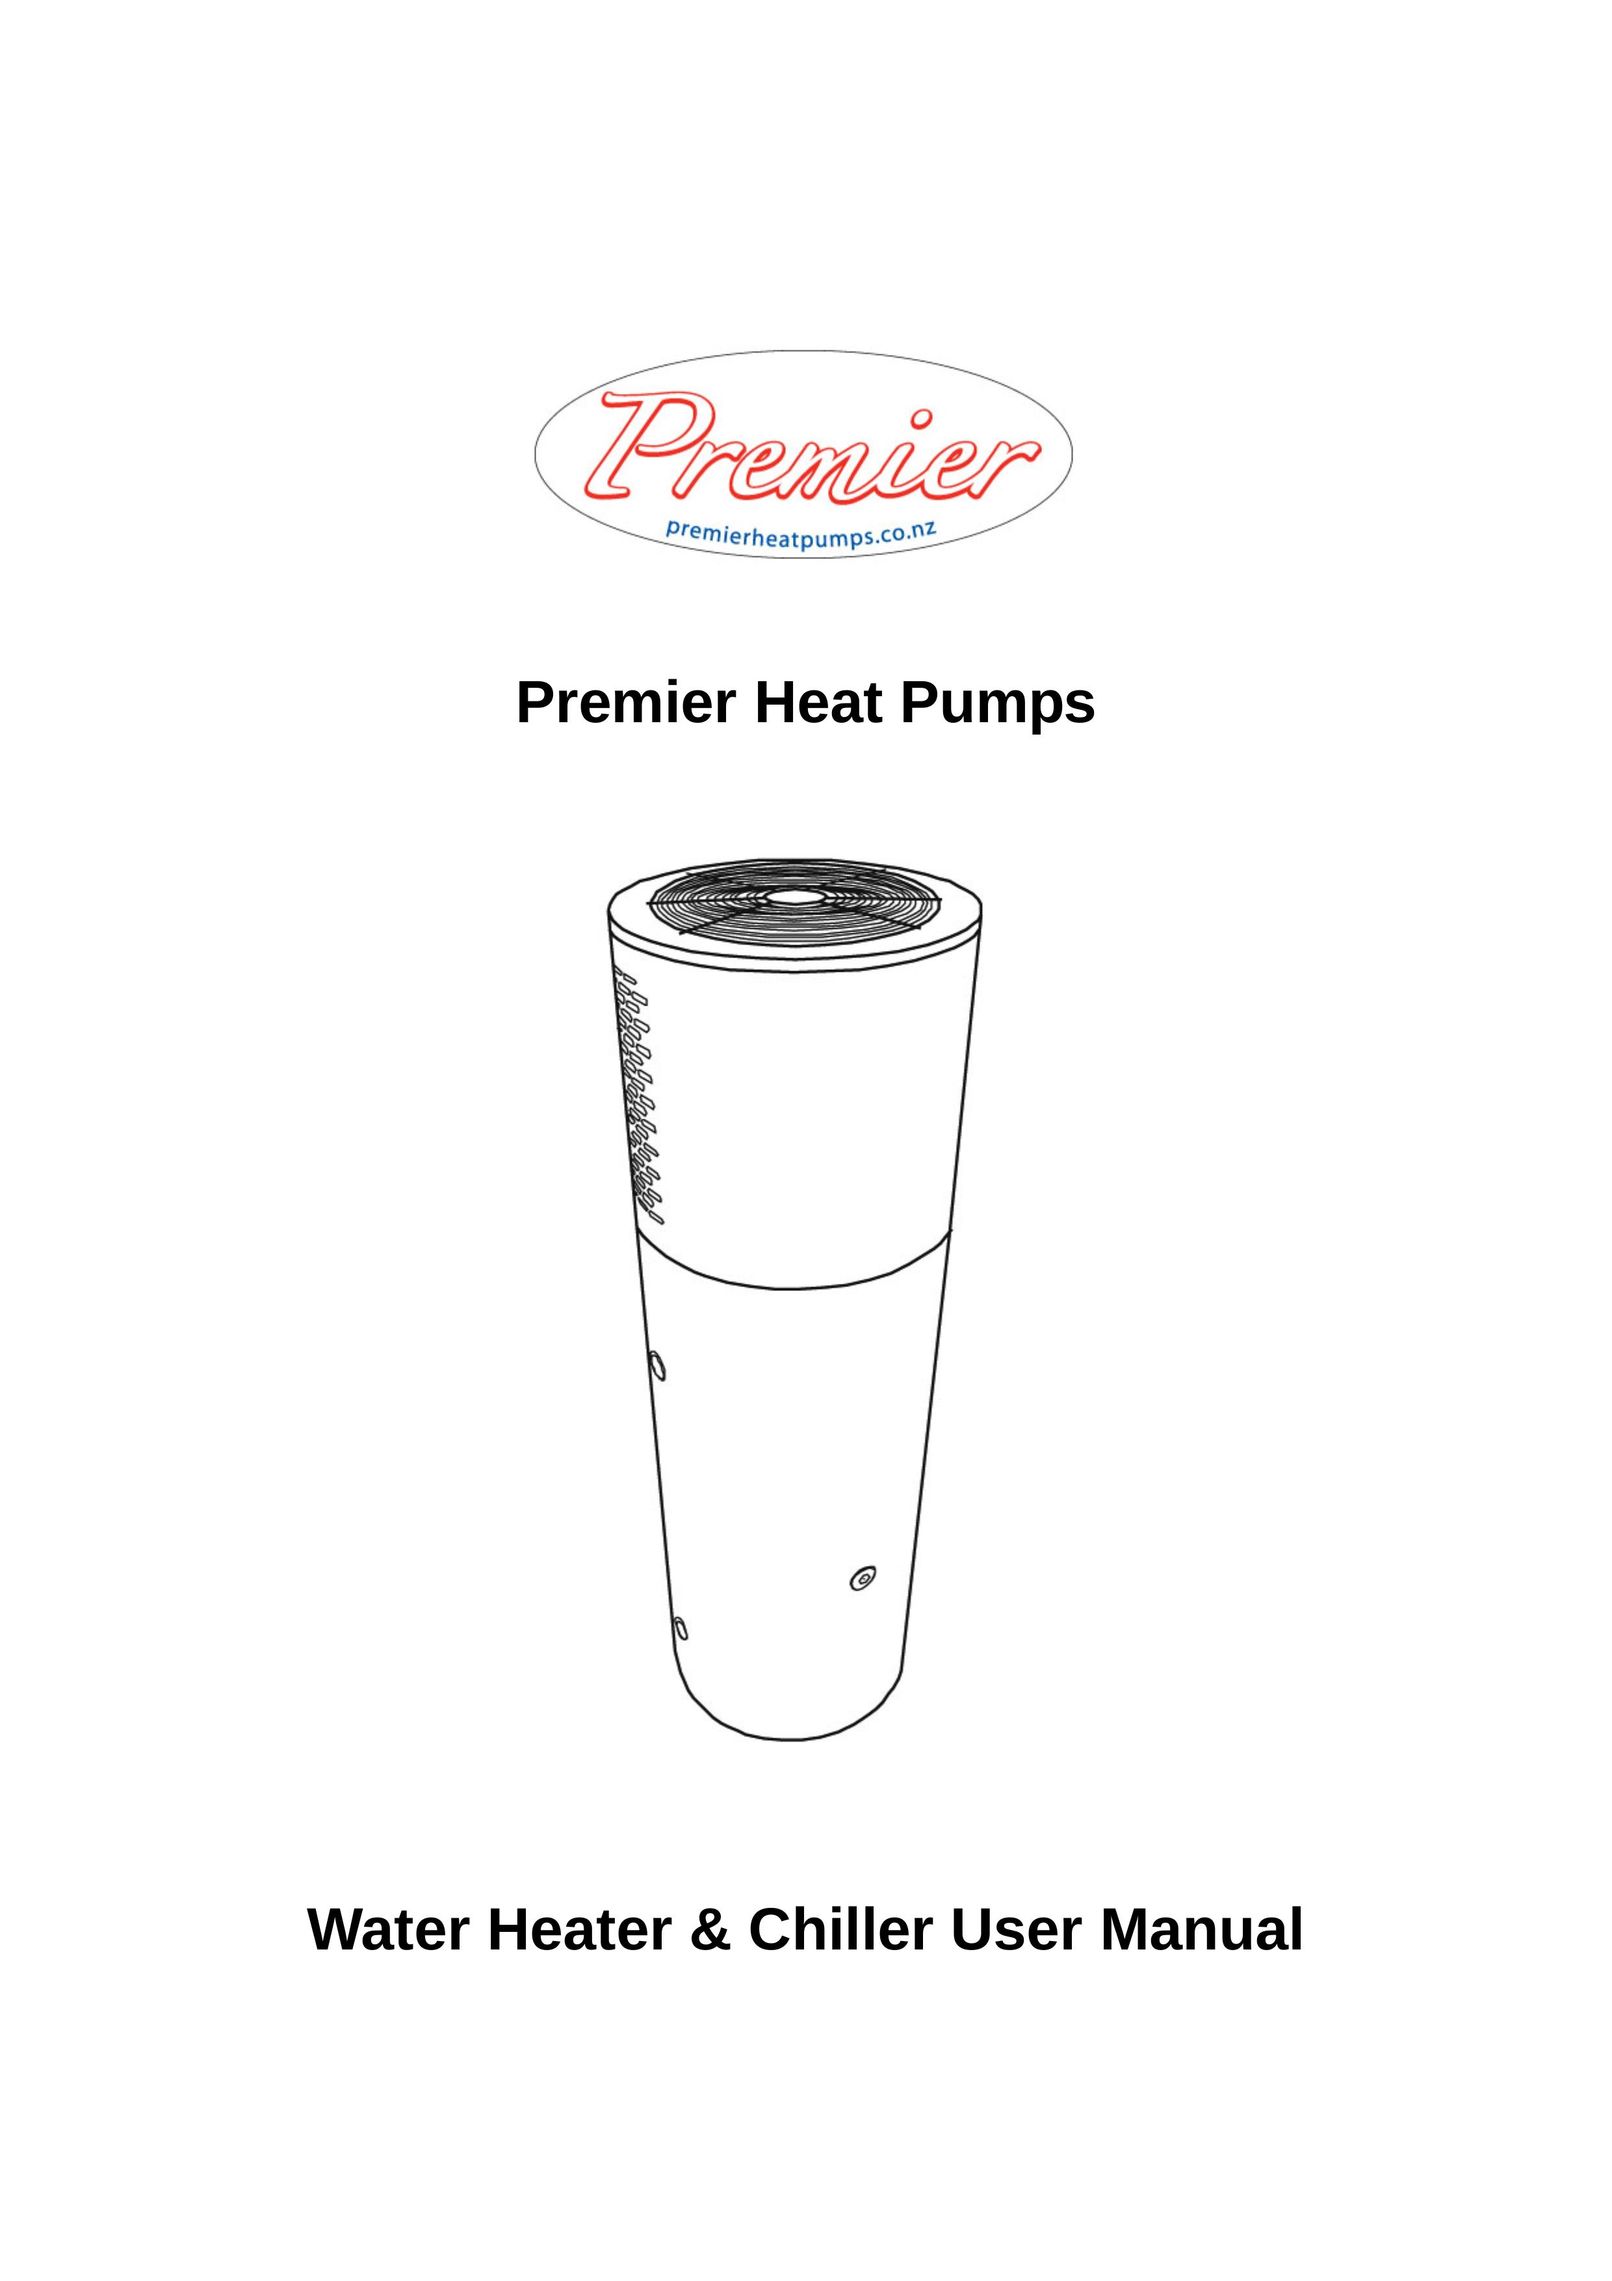 Premier PHP HWC-150 Heat Pump User Manual